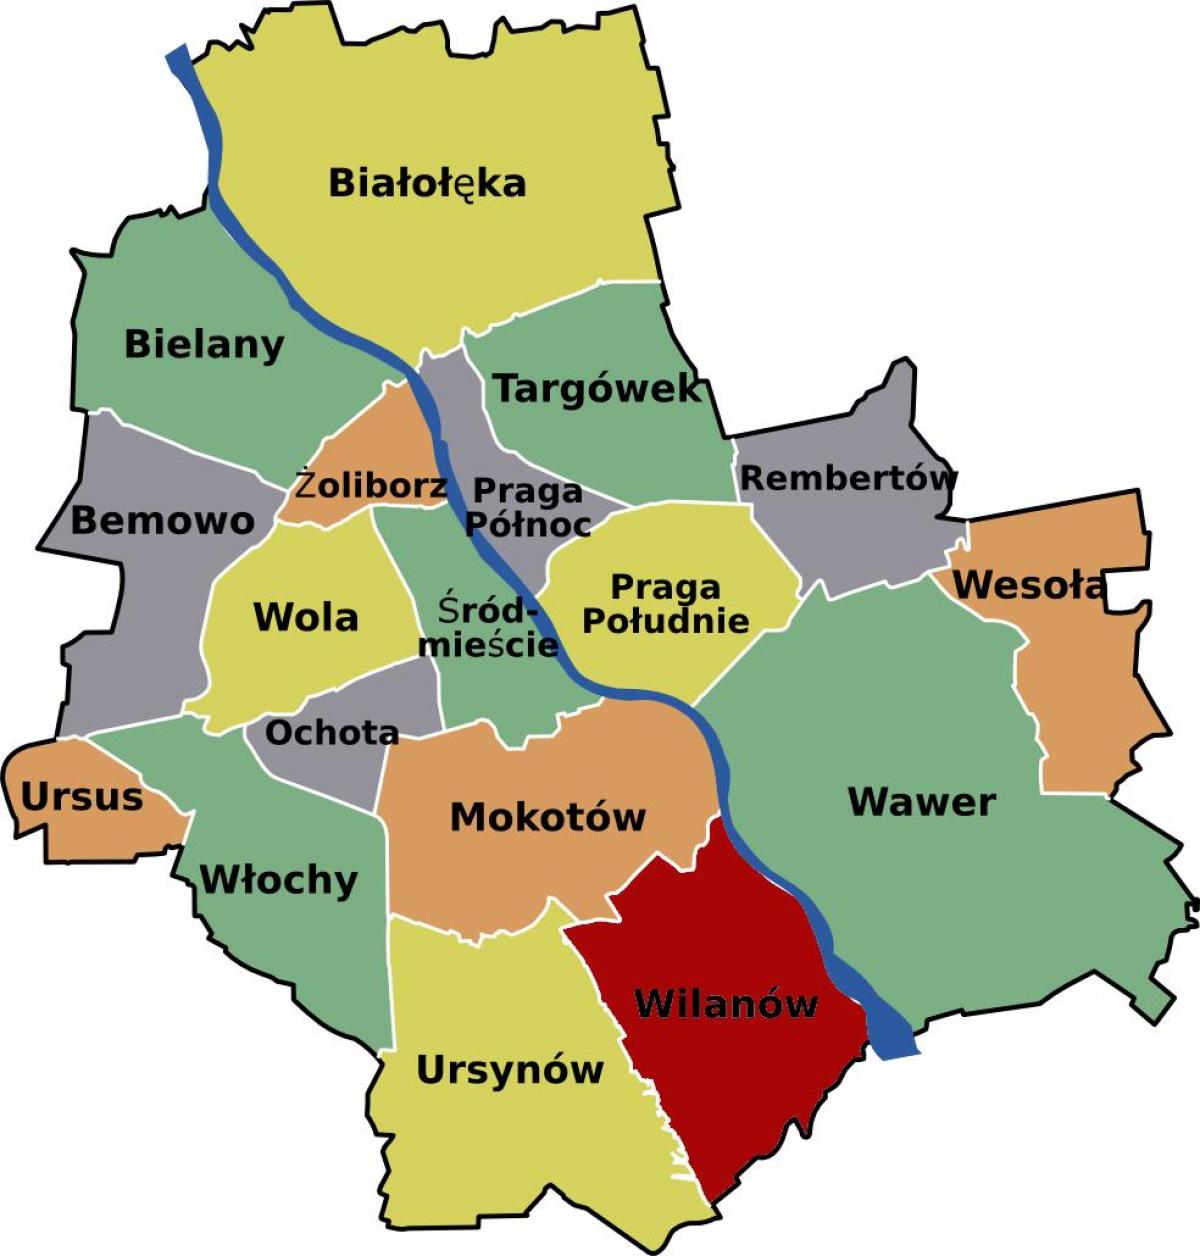 Mapa de barrios de Varsovia 